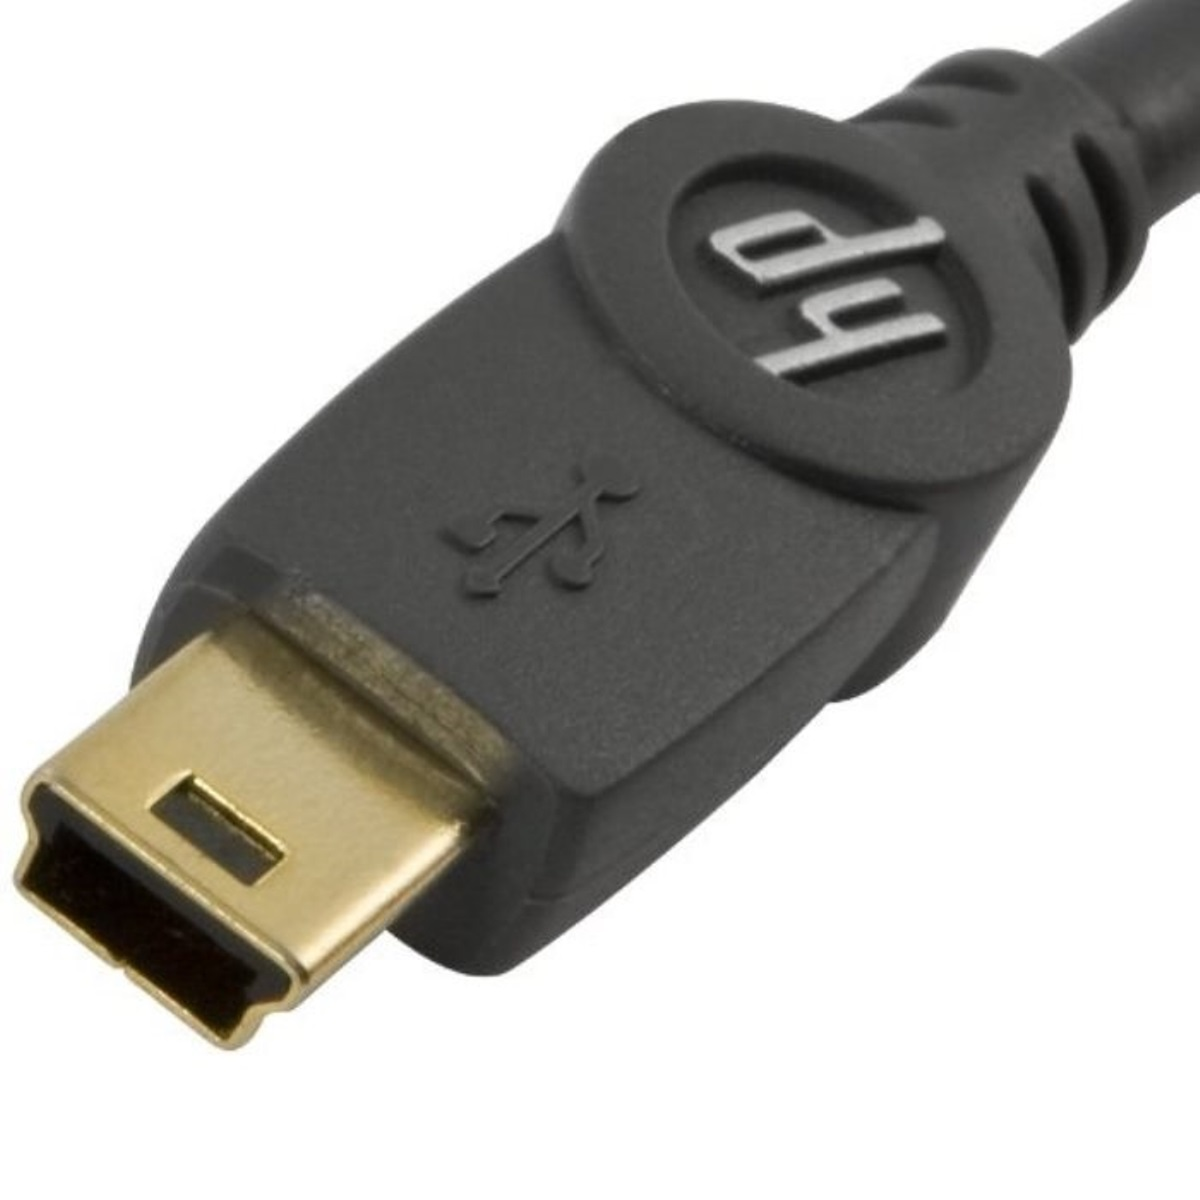 MONSTER CABLE Kabel, 0,9m Schwarz High-Speed Mini-USB-Kabel HP Mini-USB